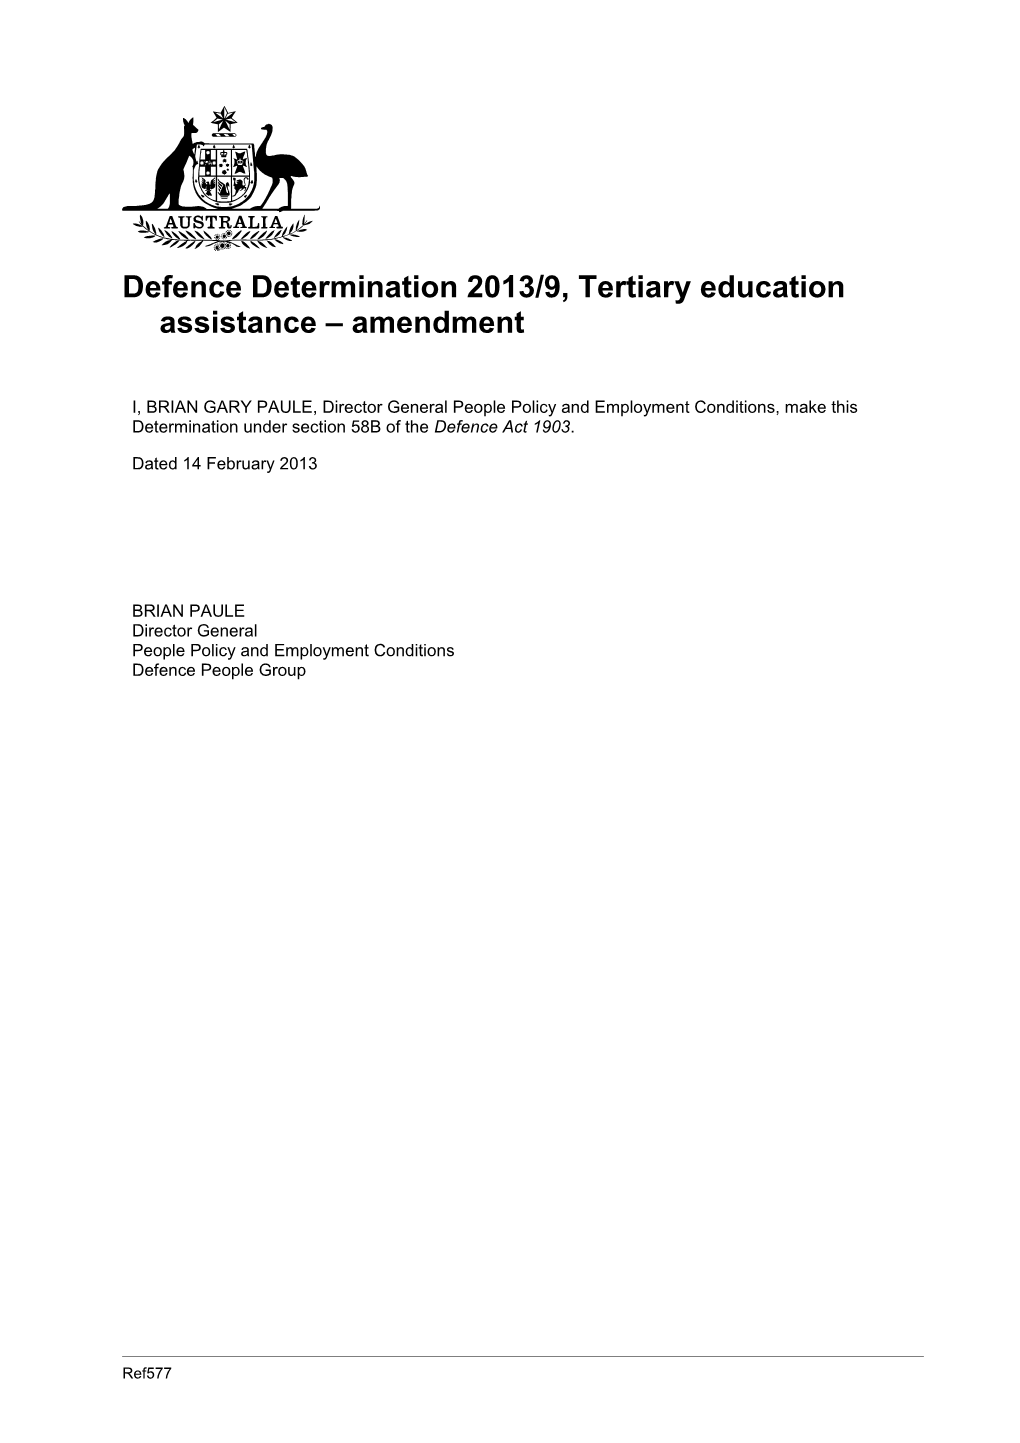 Defence Determination 2013/9, Tertiary Education Assistance Amendment